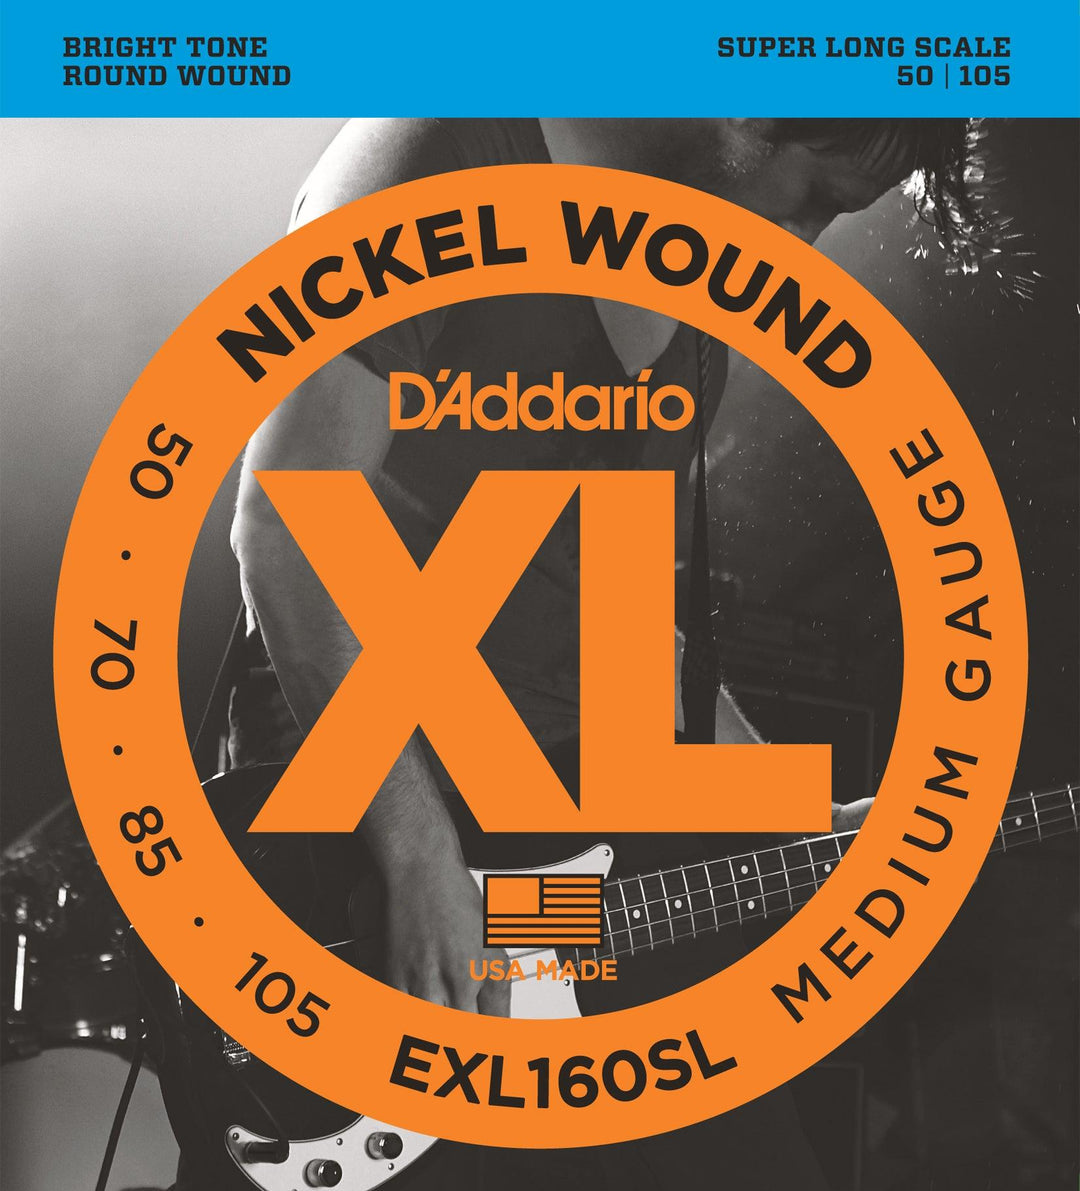 D'Addario XL Bass Guitar String Set, Nickel, EXL160SL Medium .050-.105, Super Long Scale - A Strings